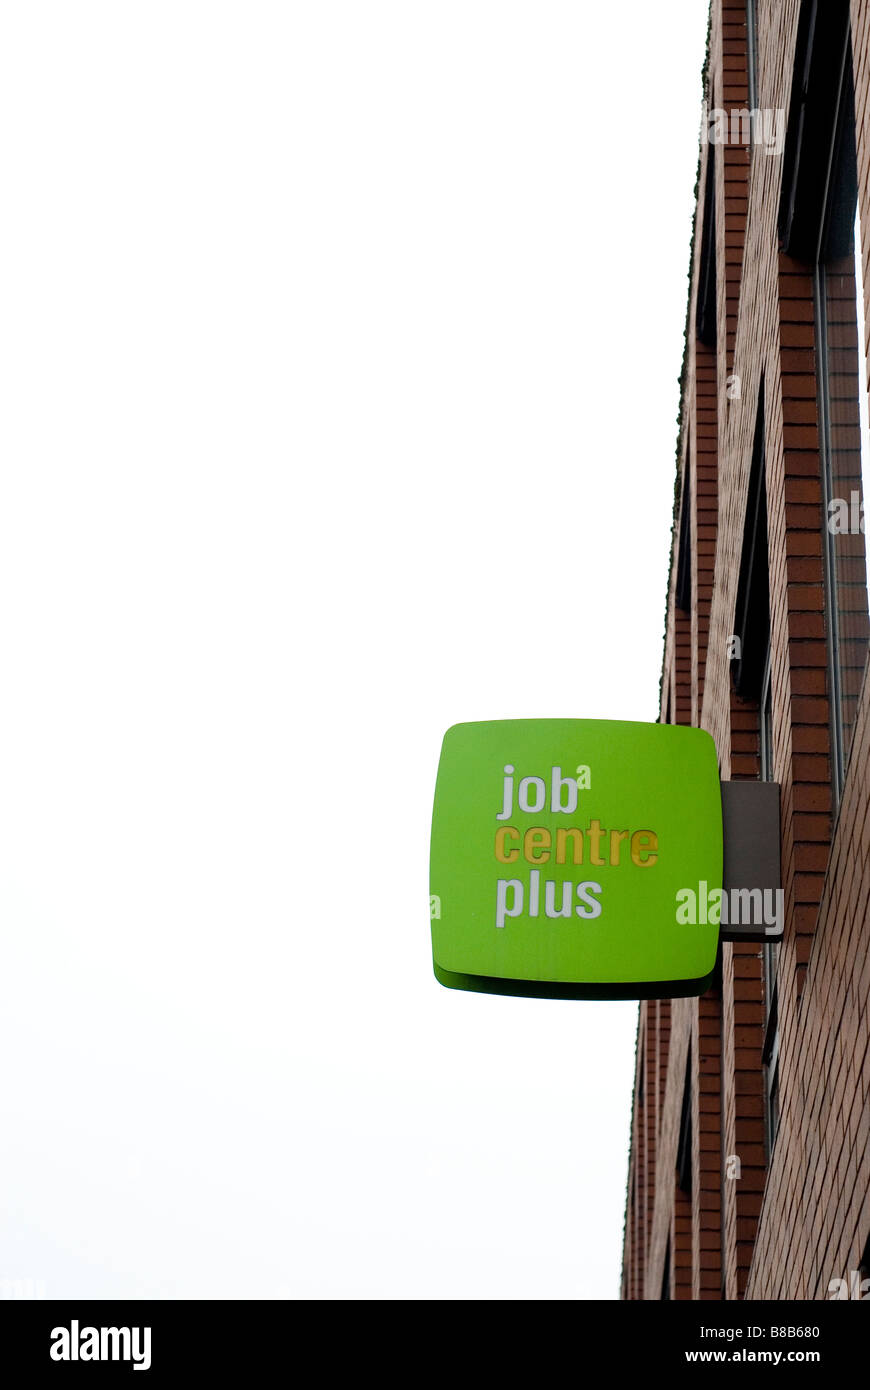 Job centre plus Building in Manchester UK Stock Photo